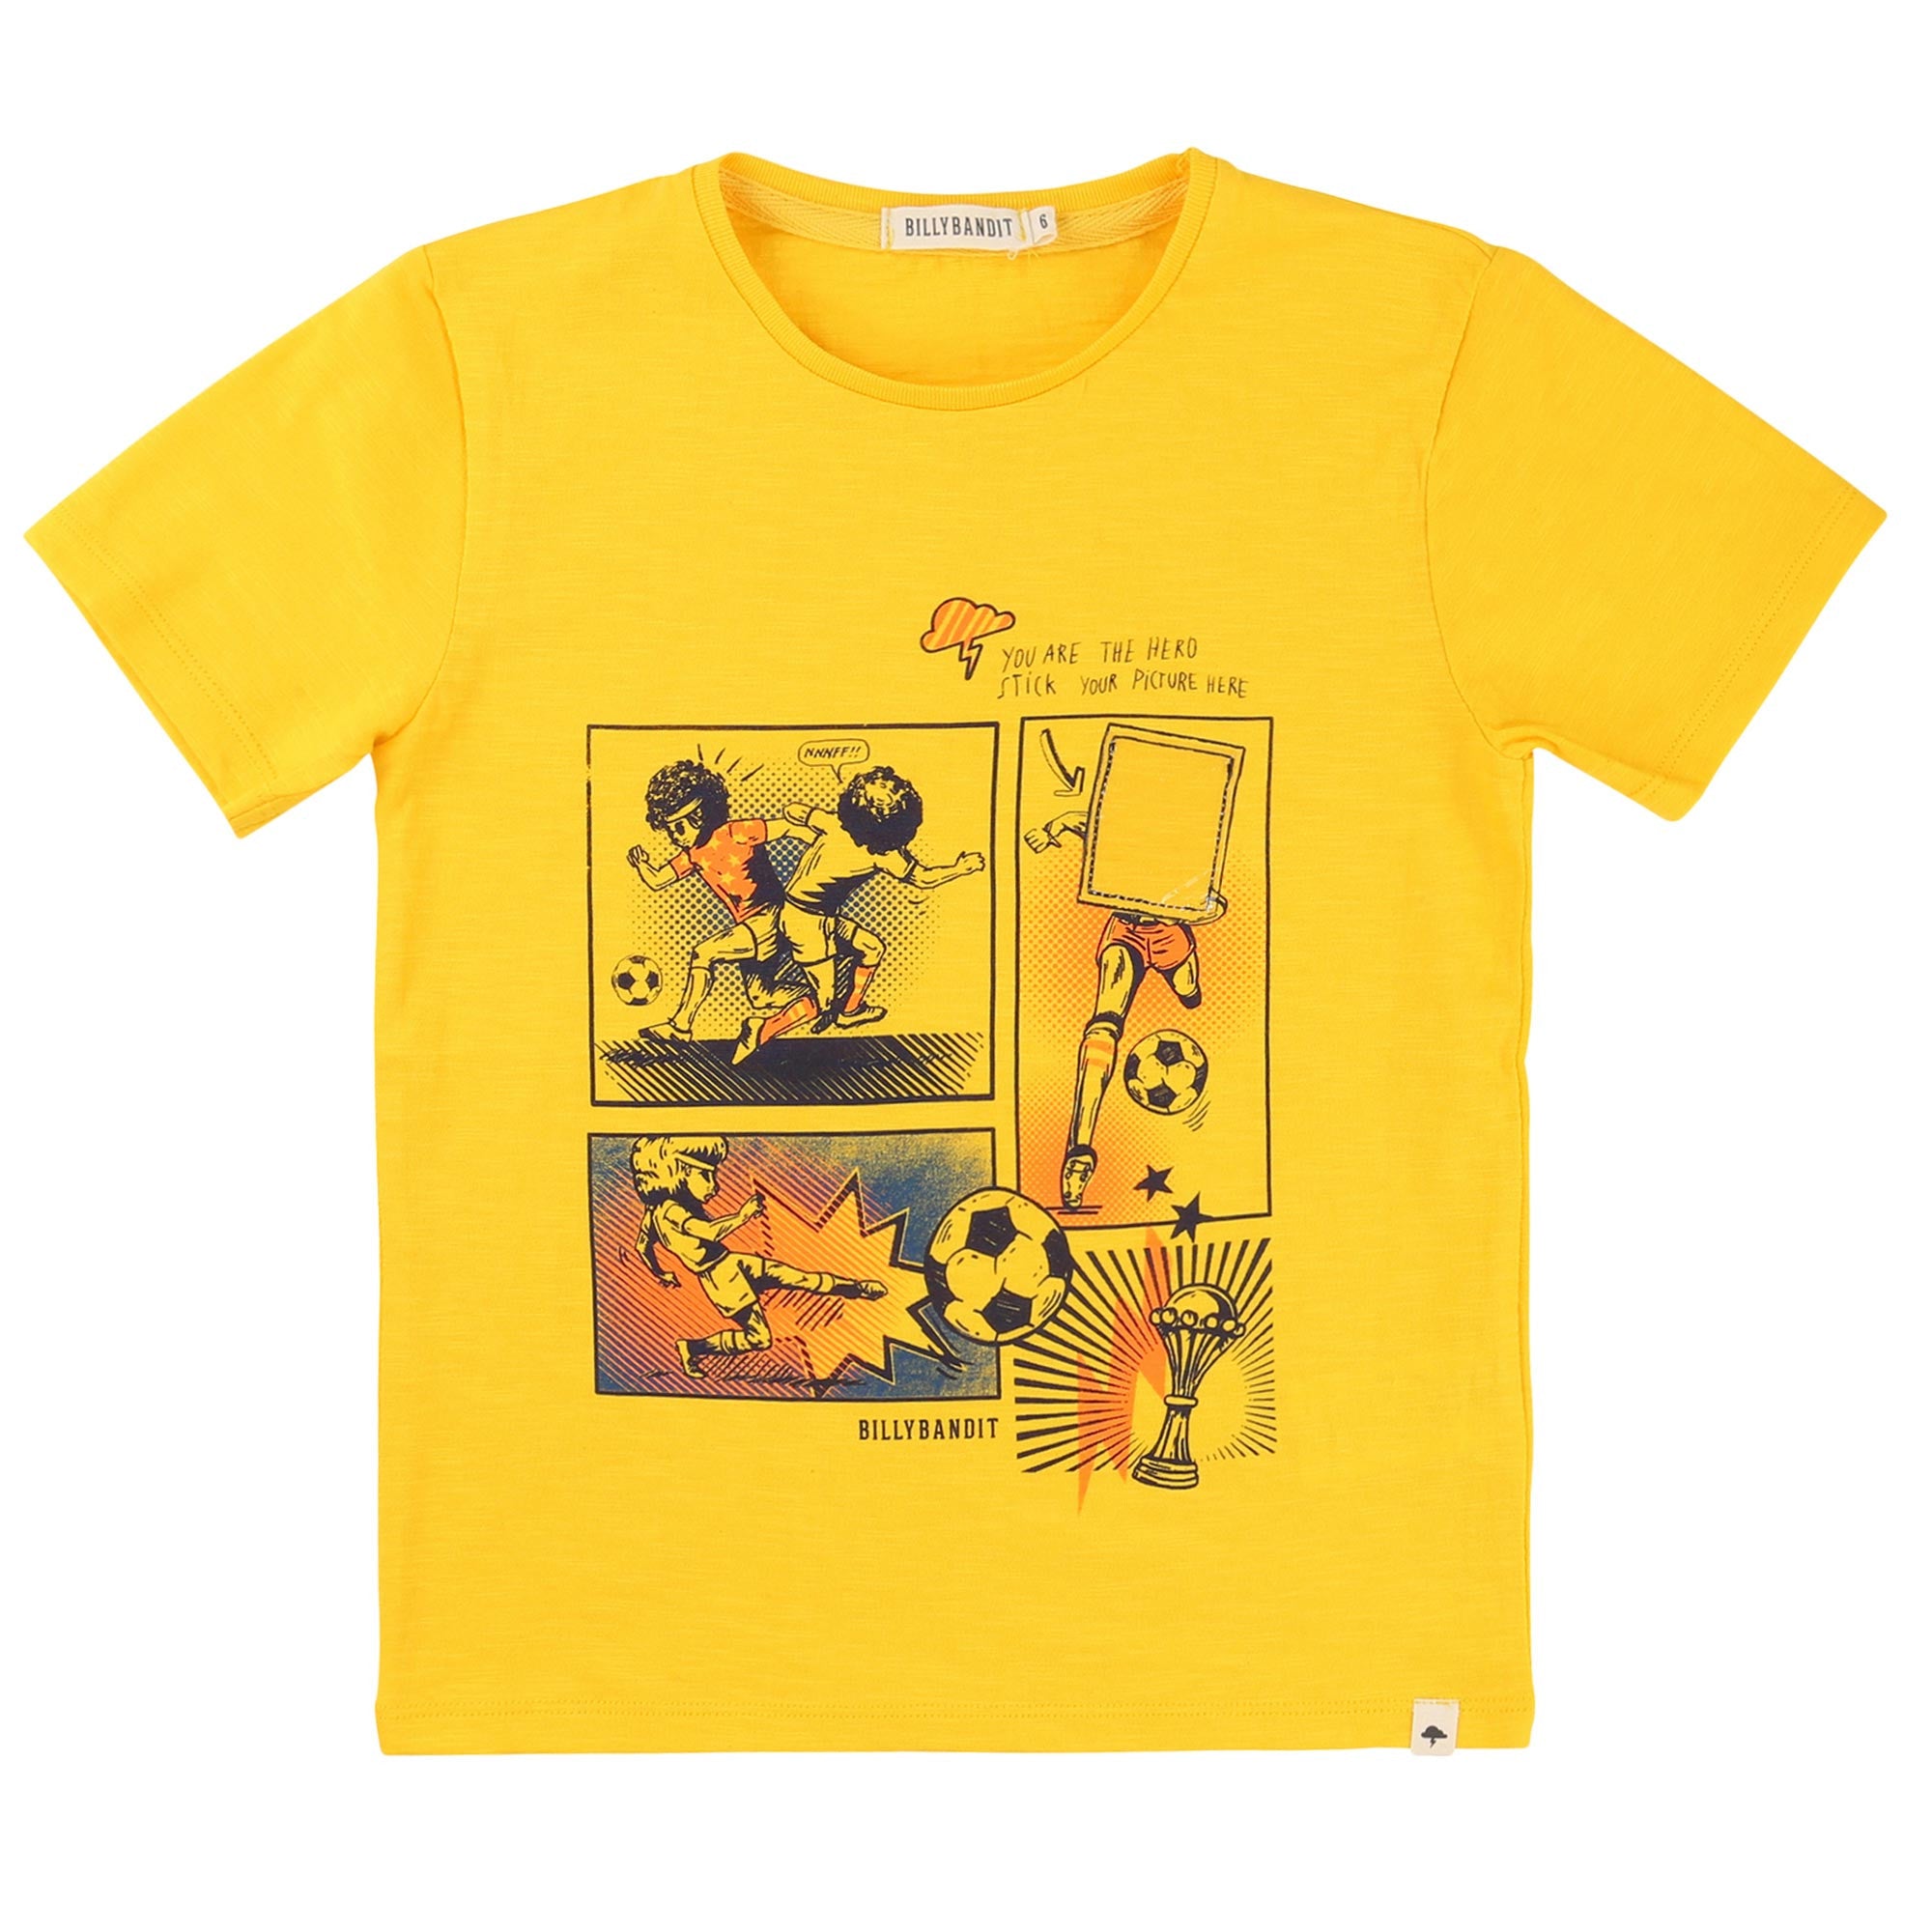 Boys Yellow Cotton T-shirt